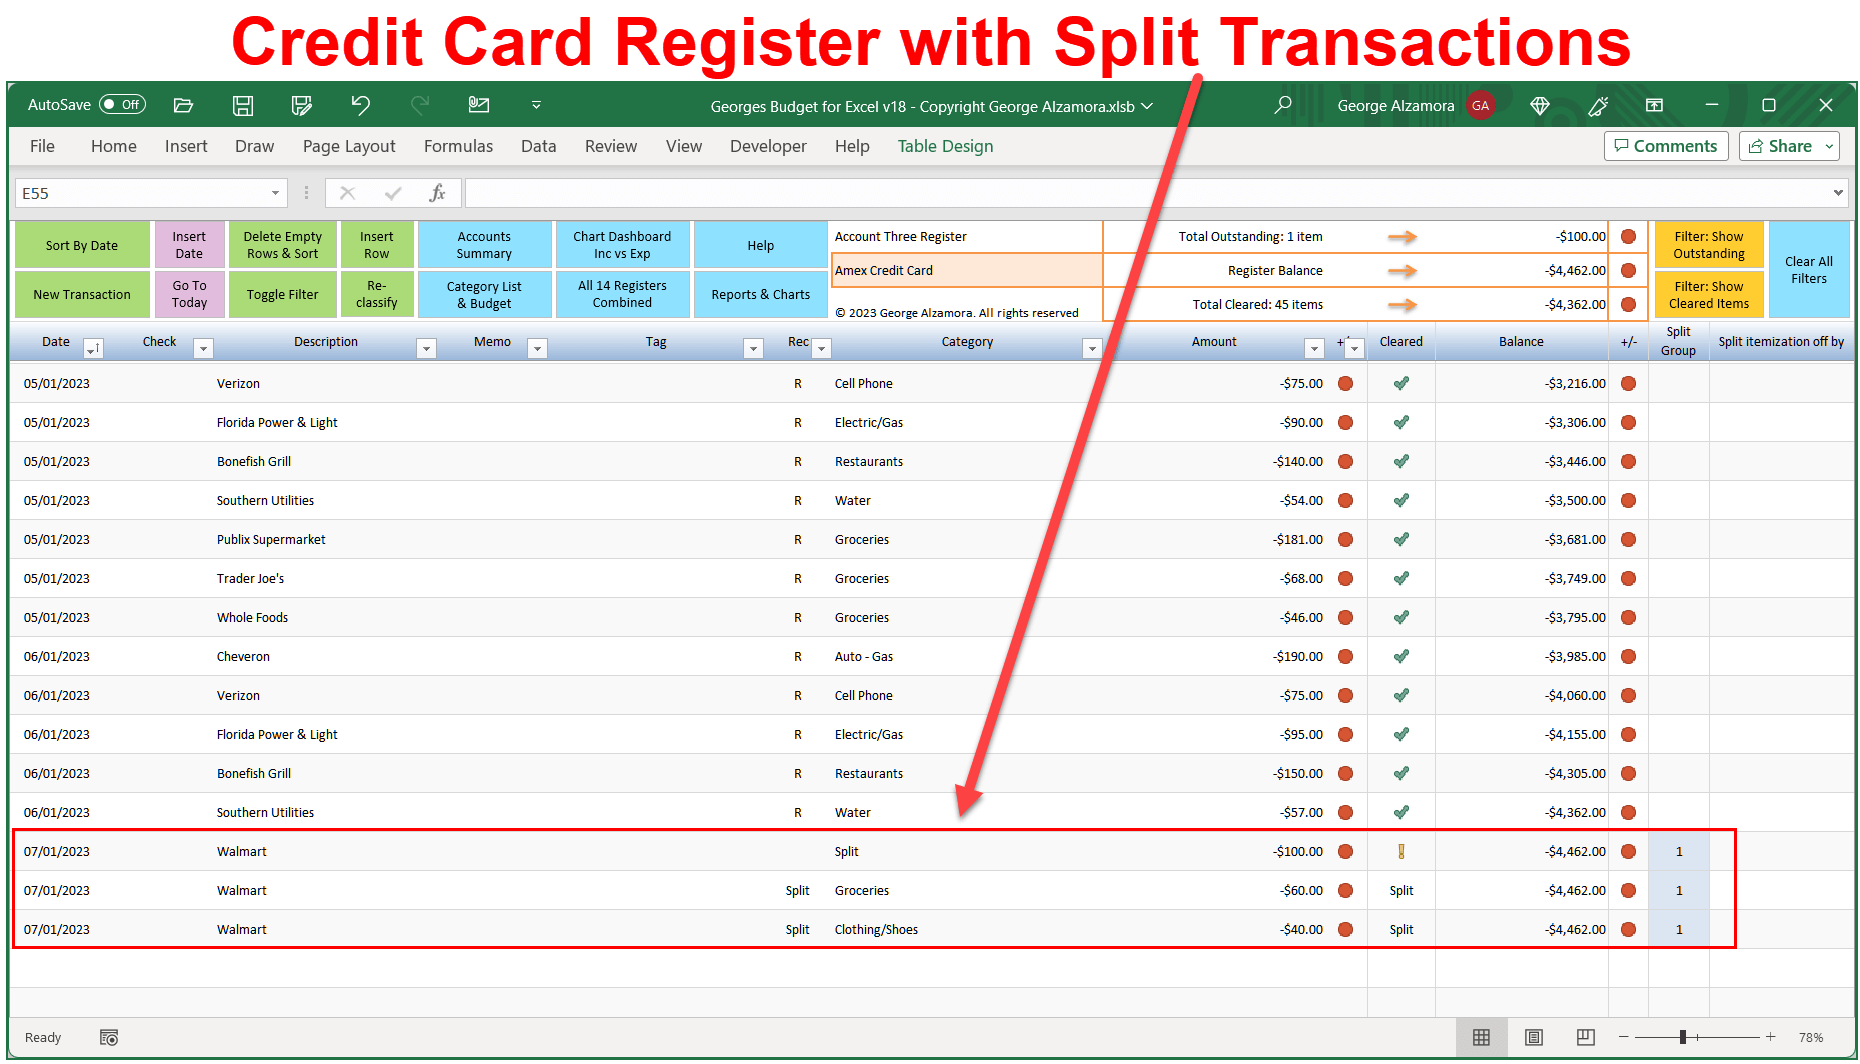 Credit card register with split transactions spreadsheet